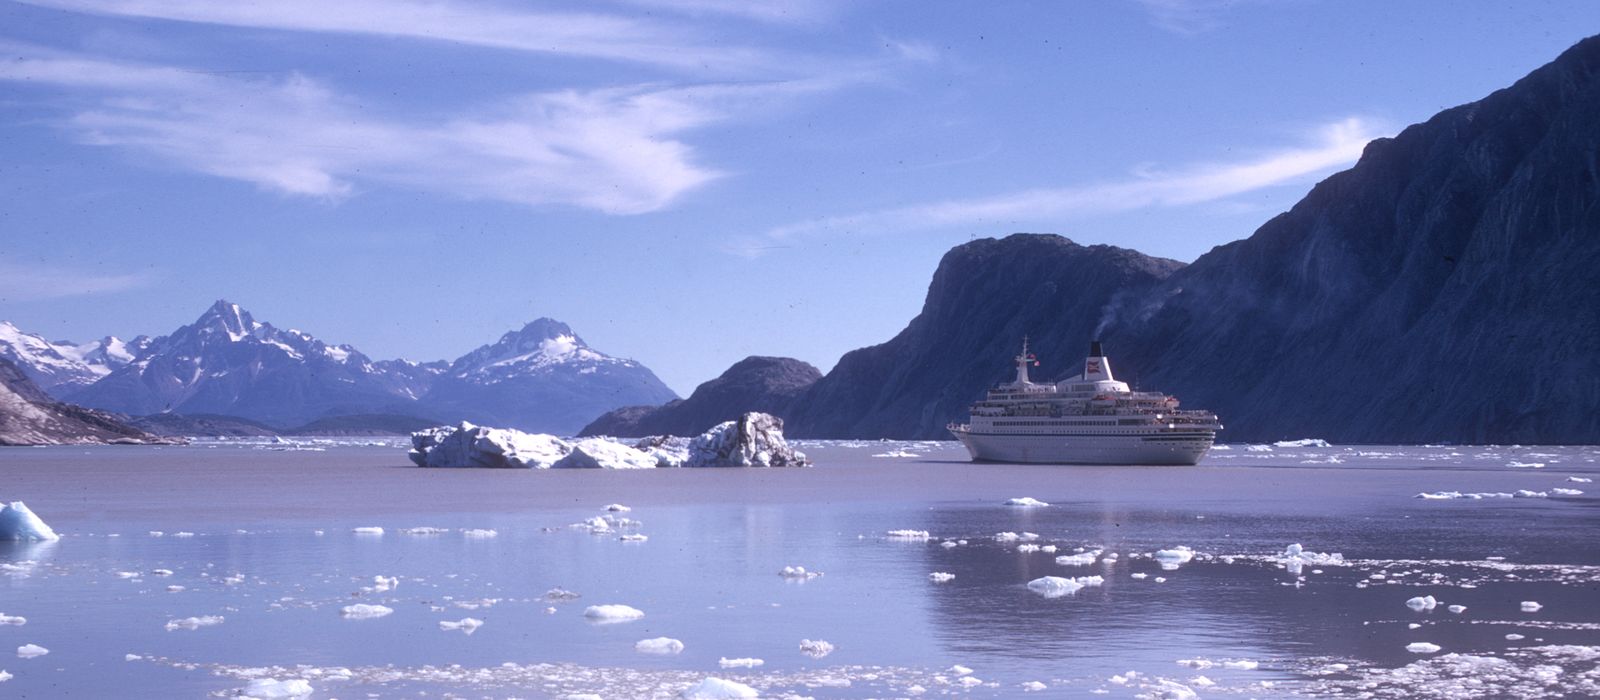 Glacier Bay National Park: Cruise